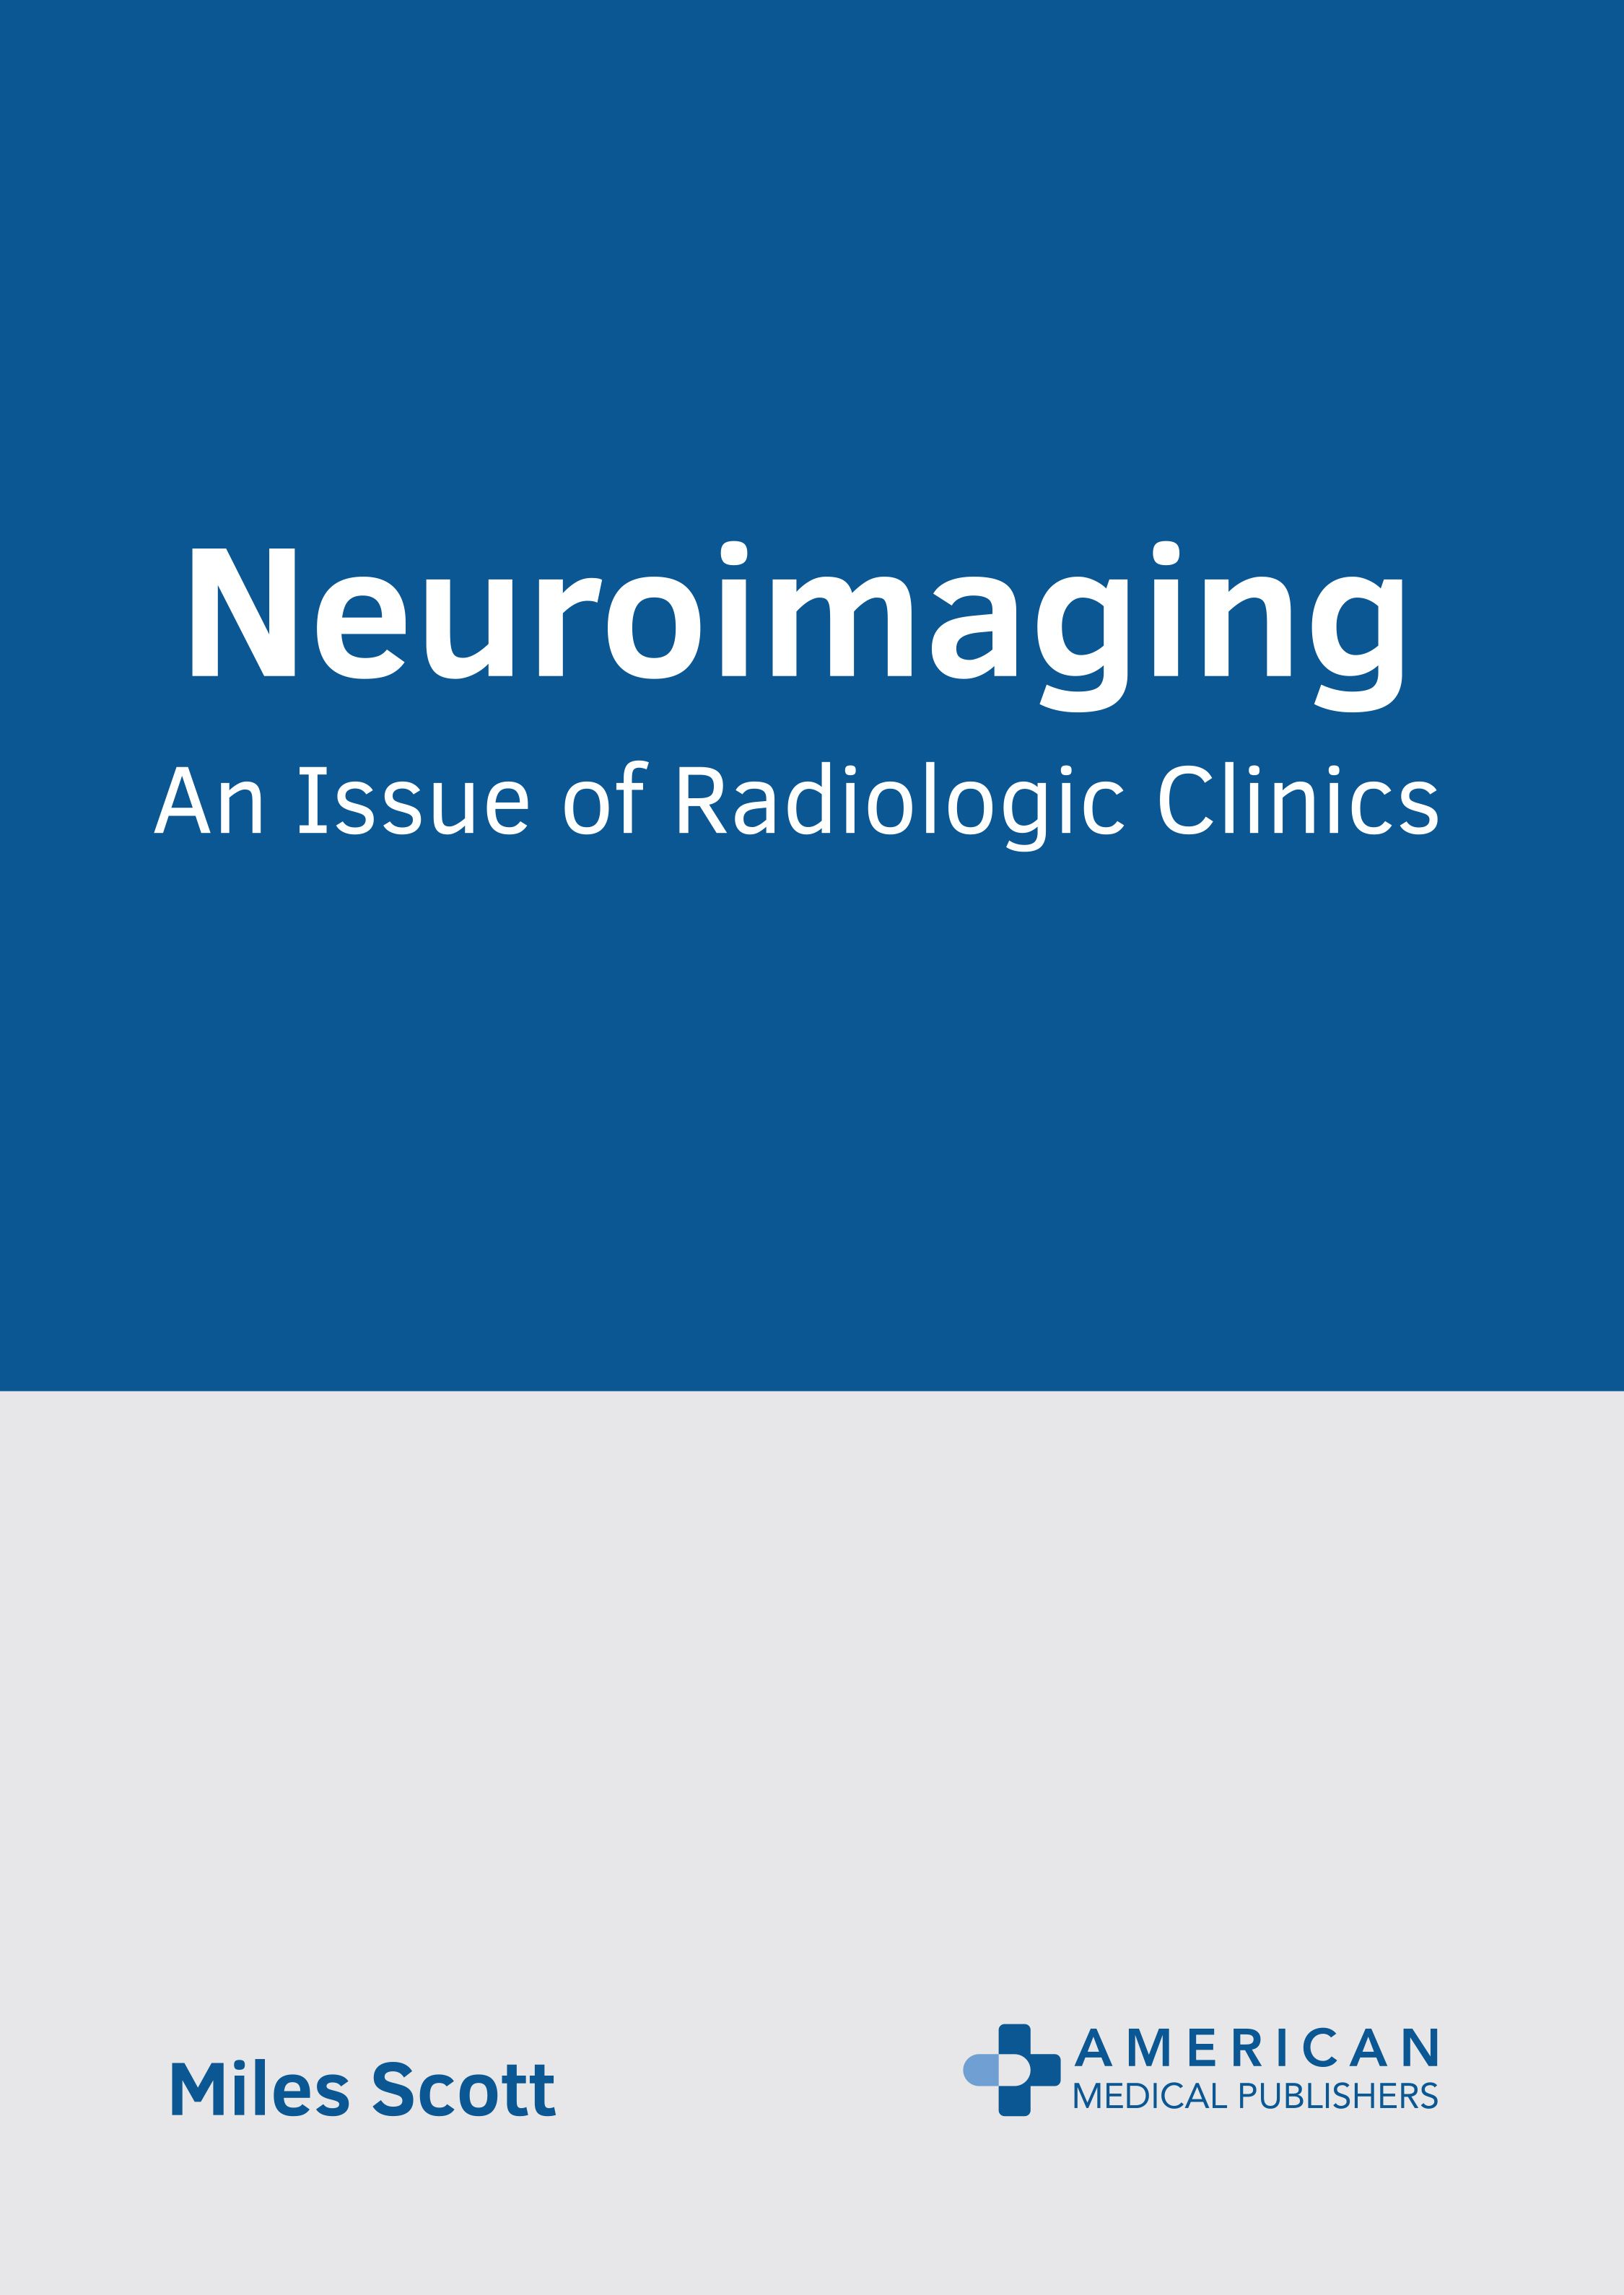 NEUROIMAGING: AN ISSUE OF RADIOLOGIC CLINICS